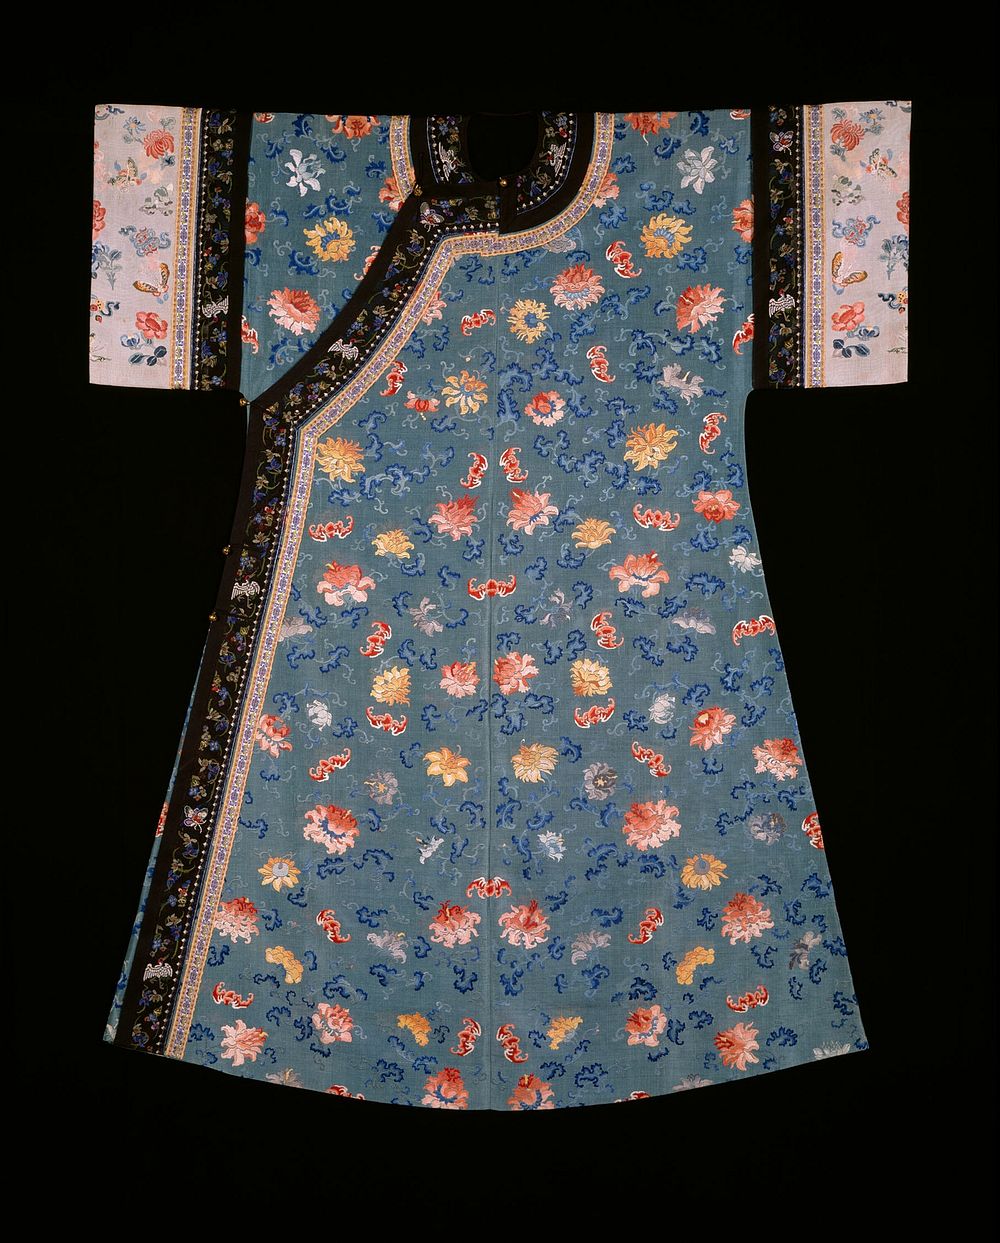 Woman's Changfu (Informal Court Robe) by Manchu